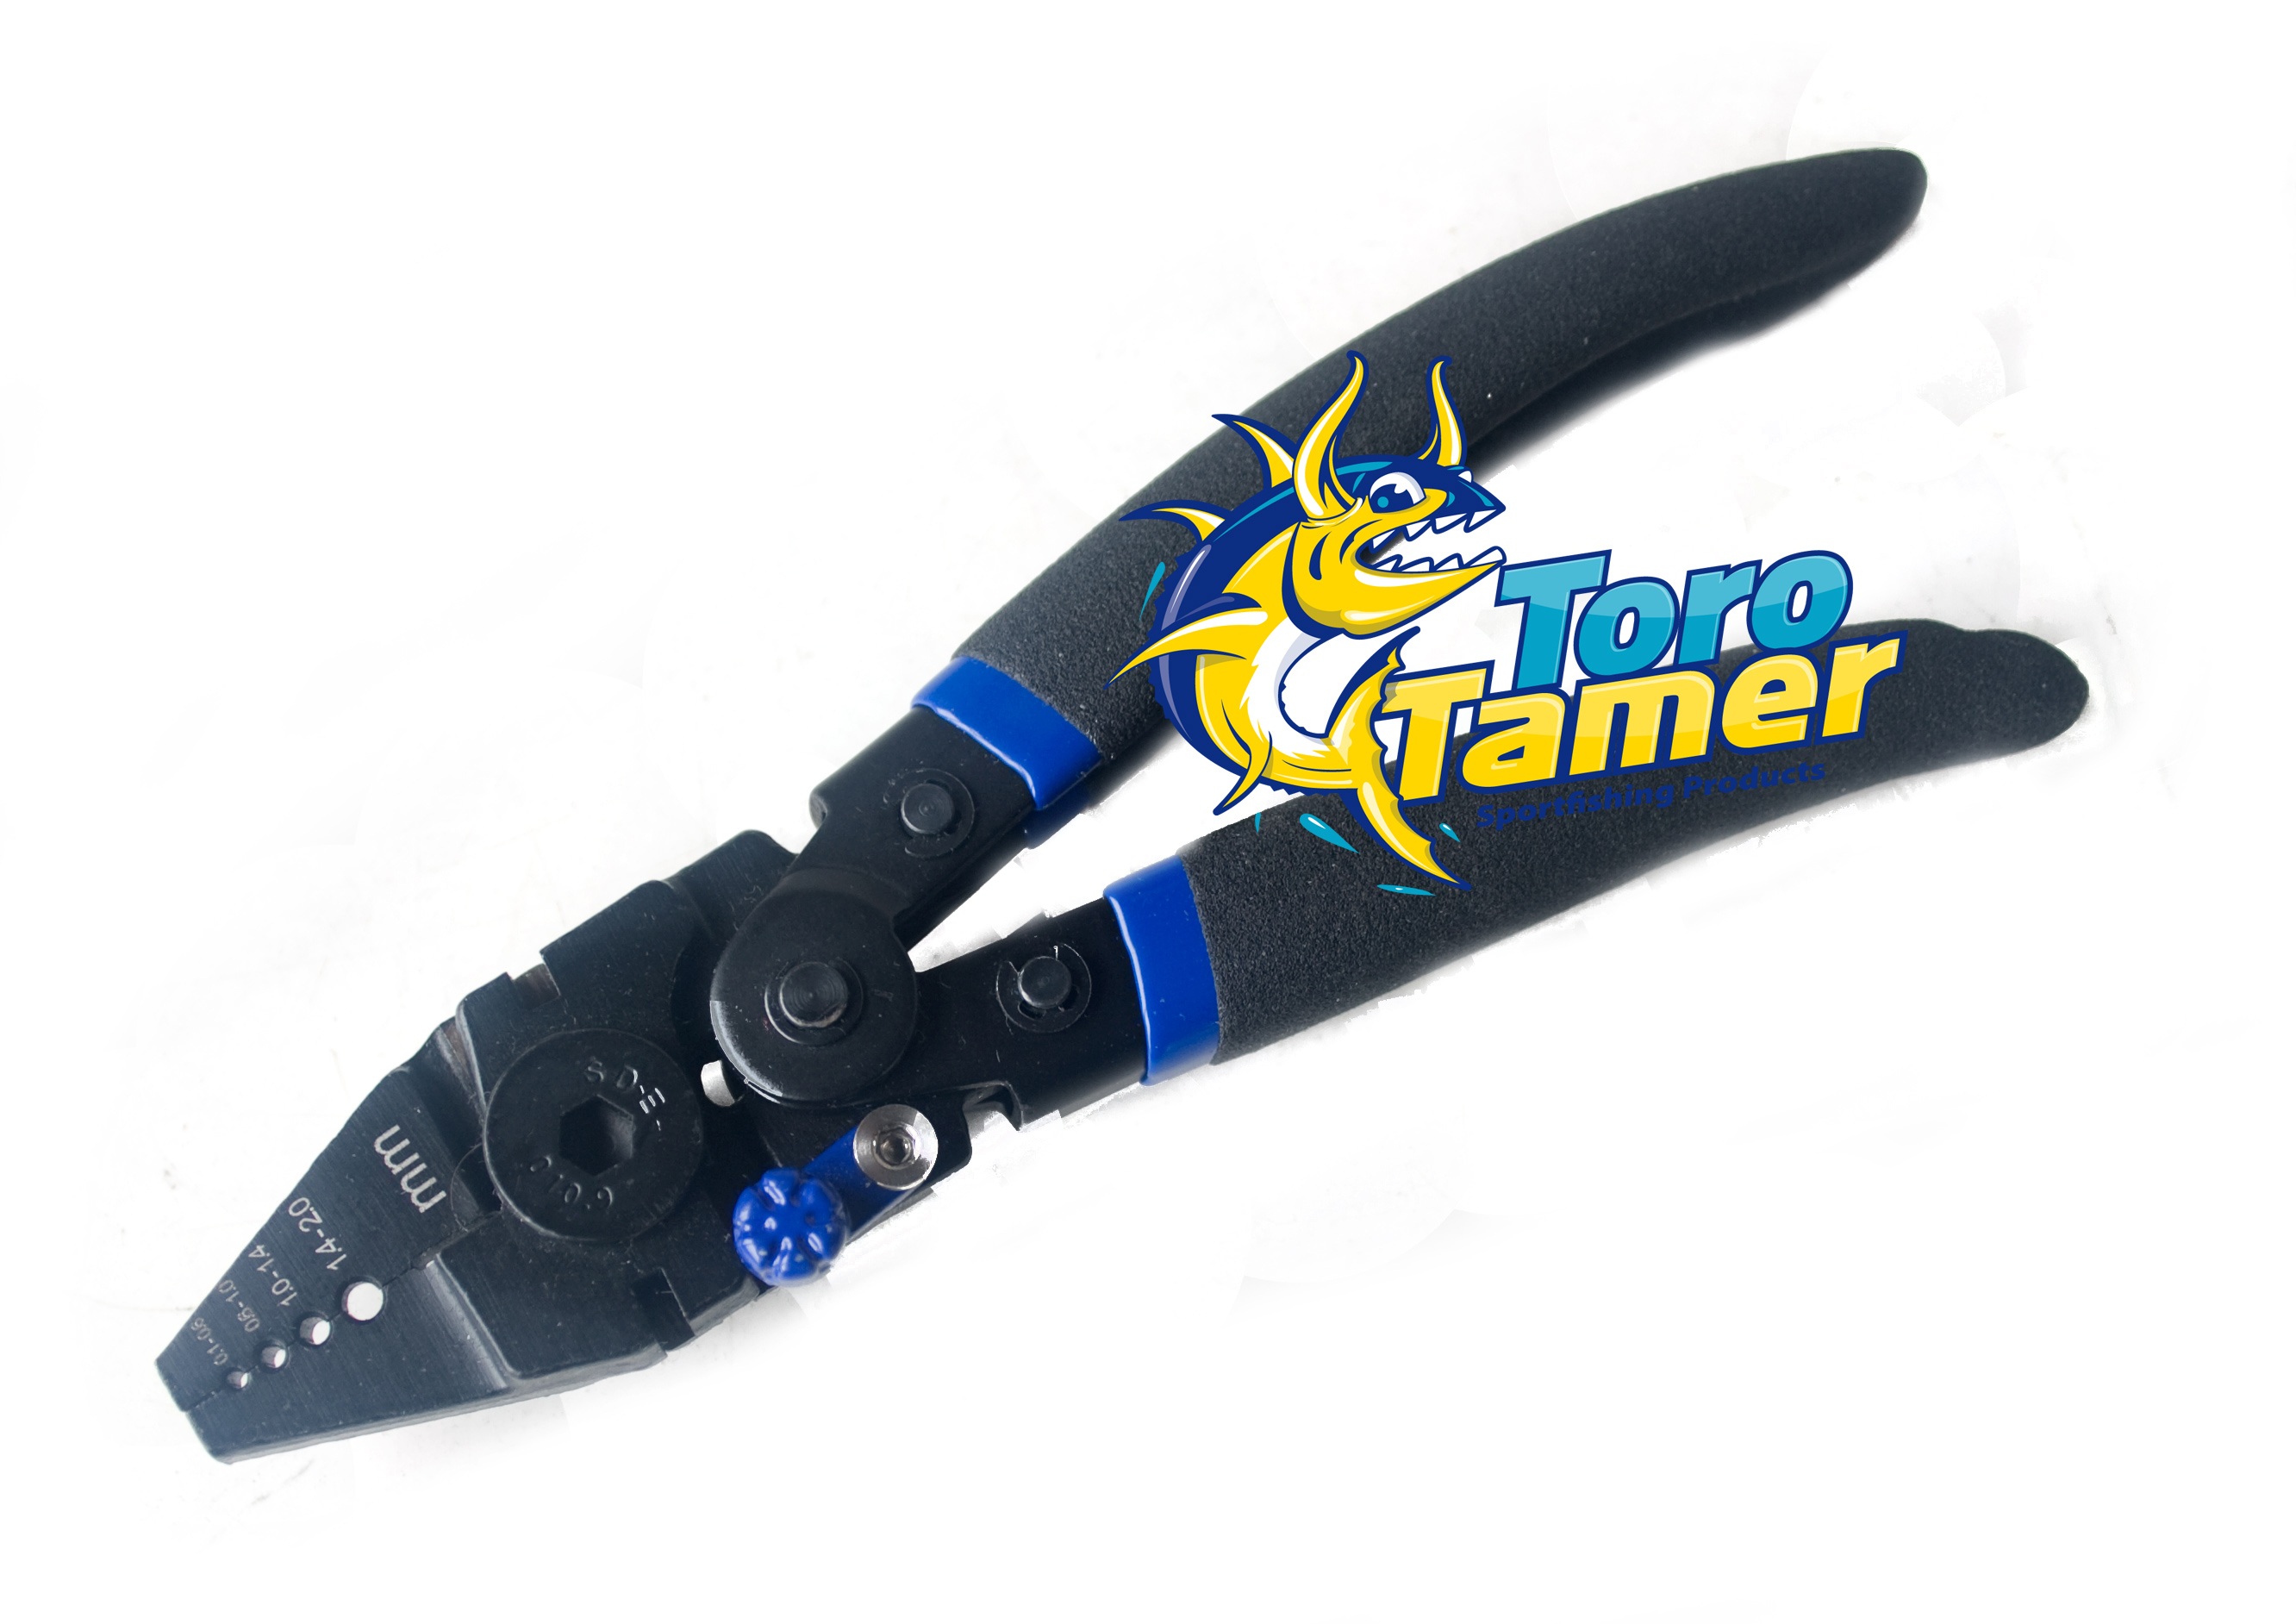 Toro Tamer Needle Nose Plier Set